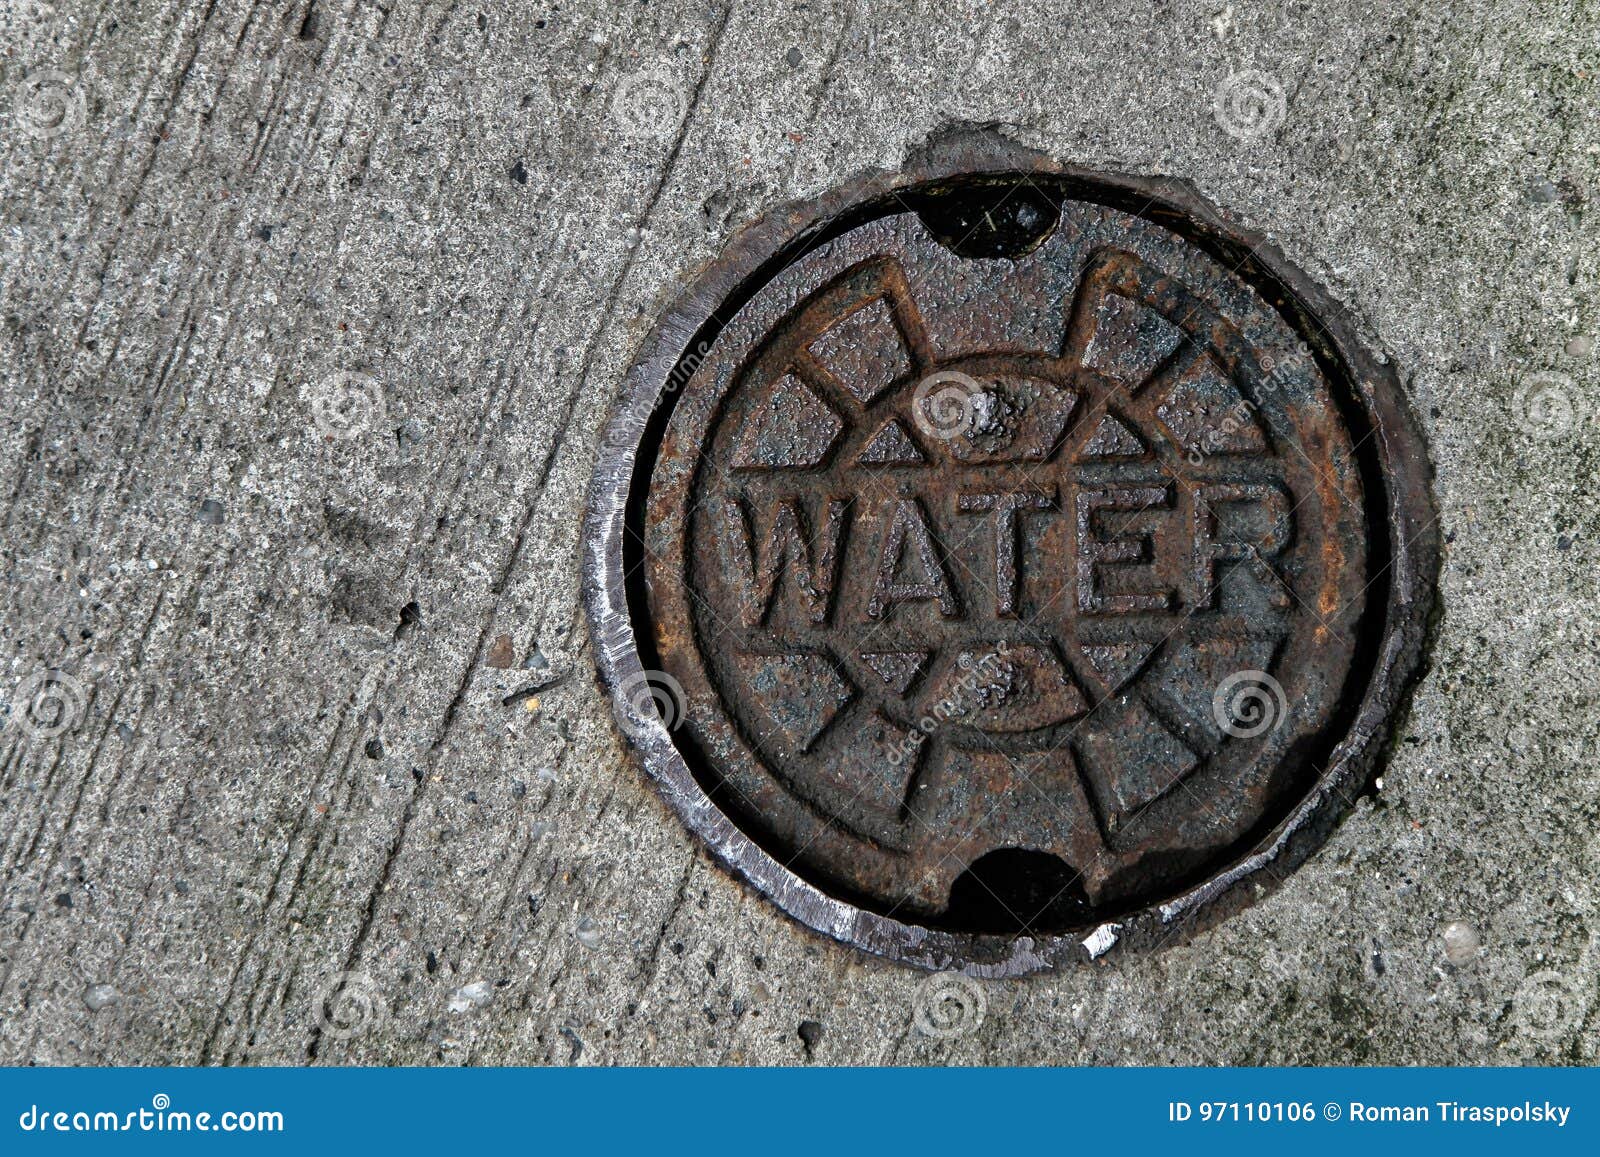 water main manhole cover